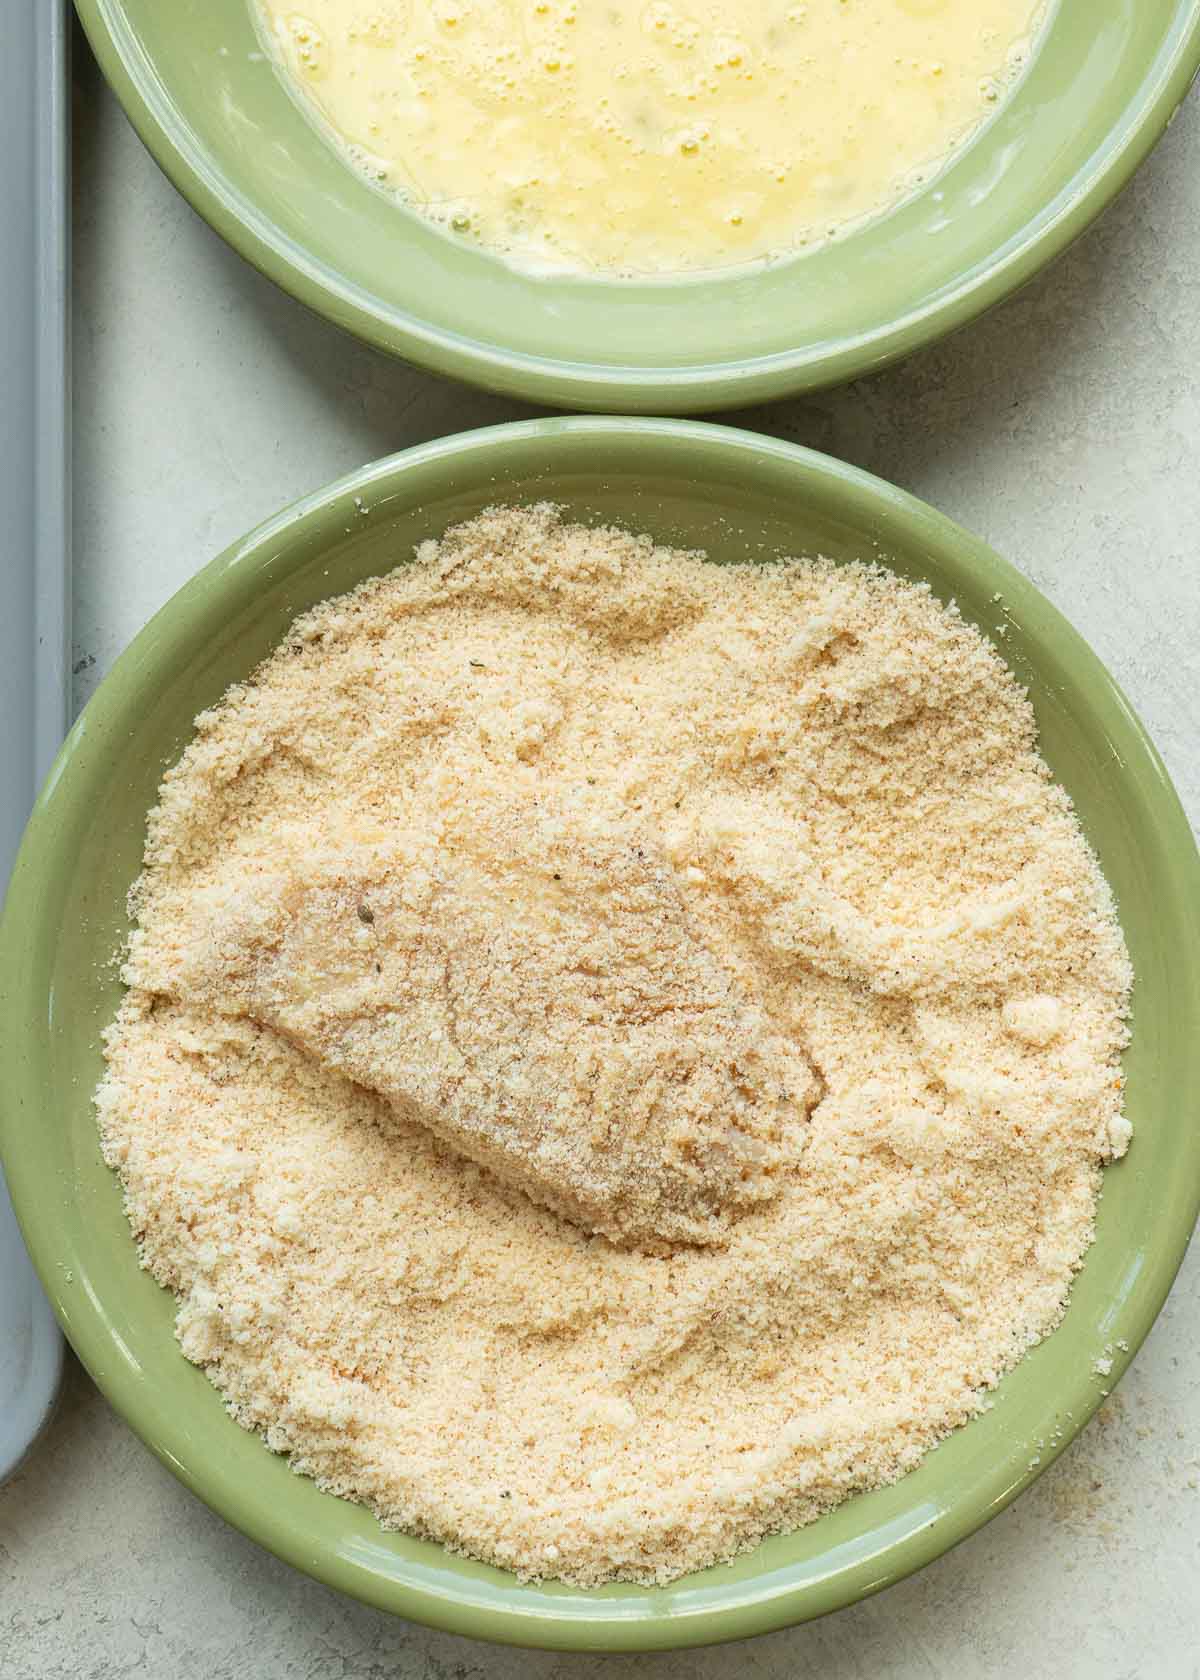 chicken tender in parmesan and almond flour mixture